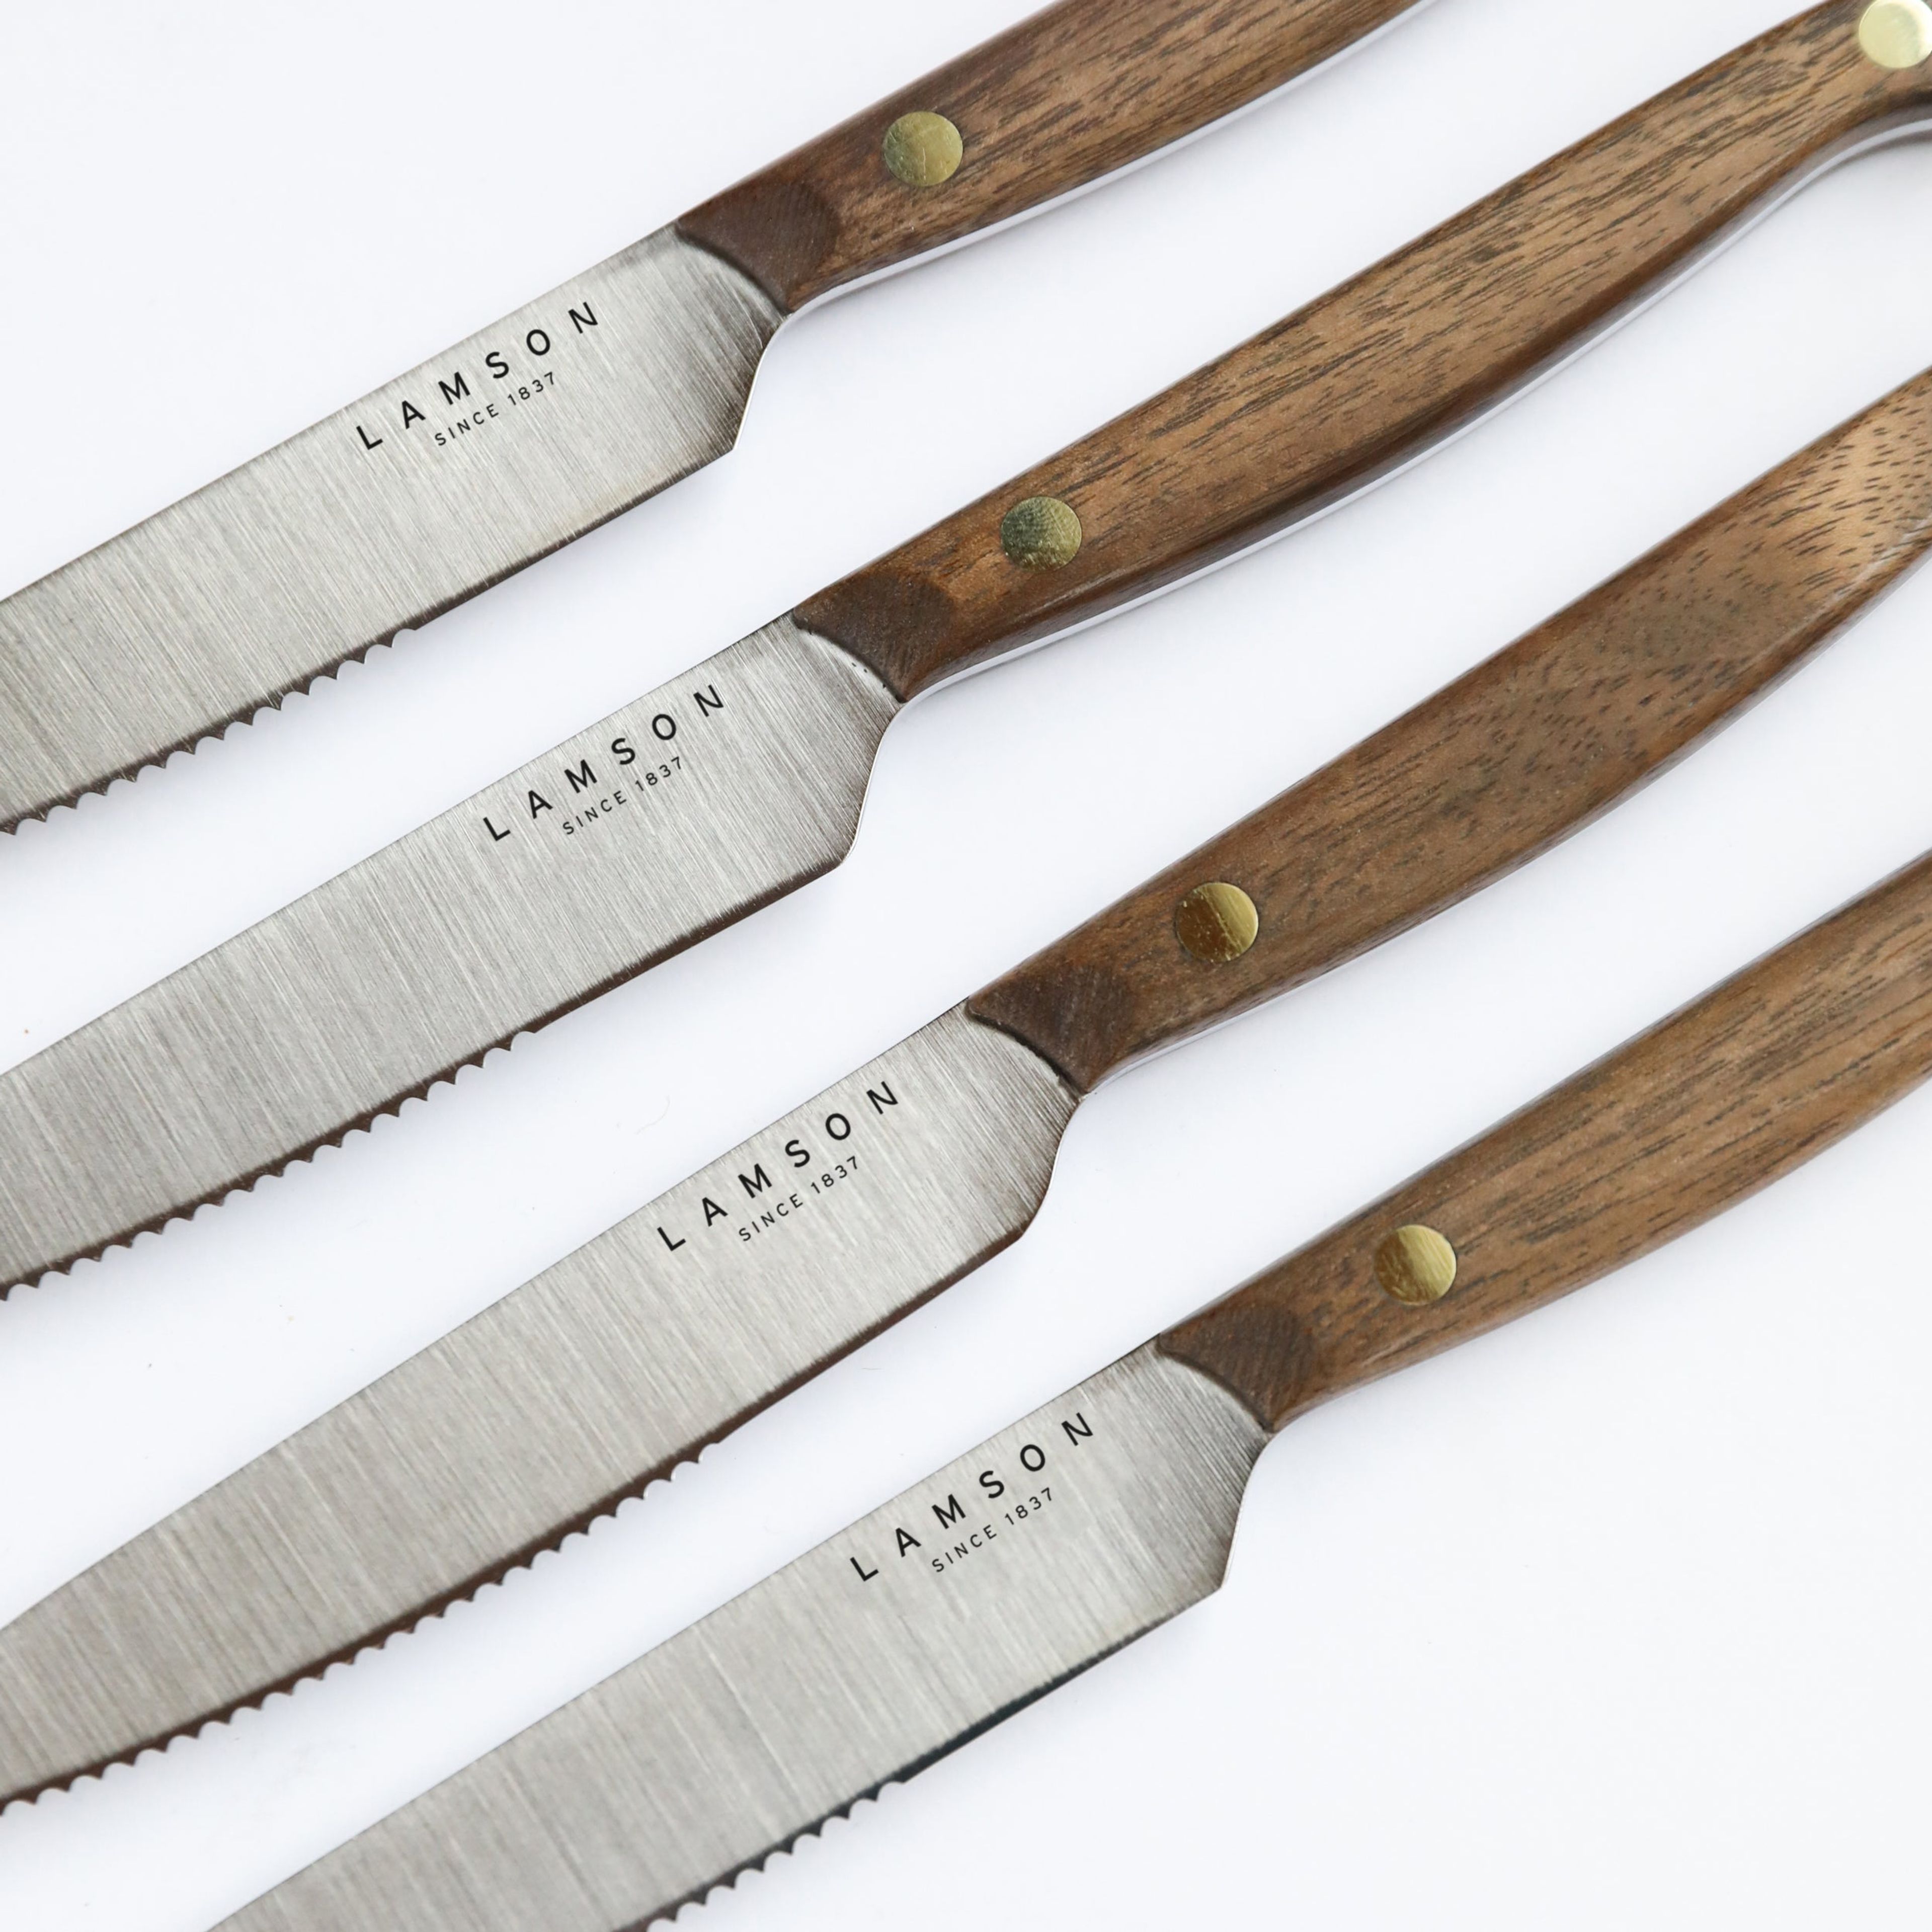 5" Vintage Steak Knives, 4-Piece Sets, Fine-Edge or Serrated